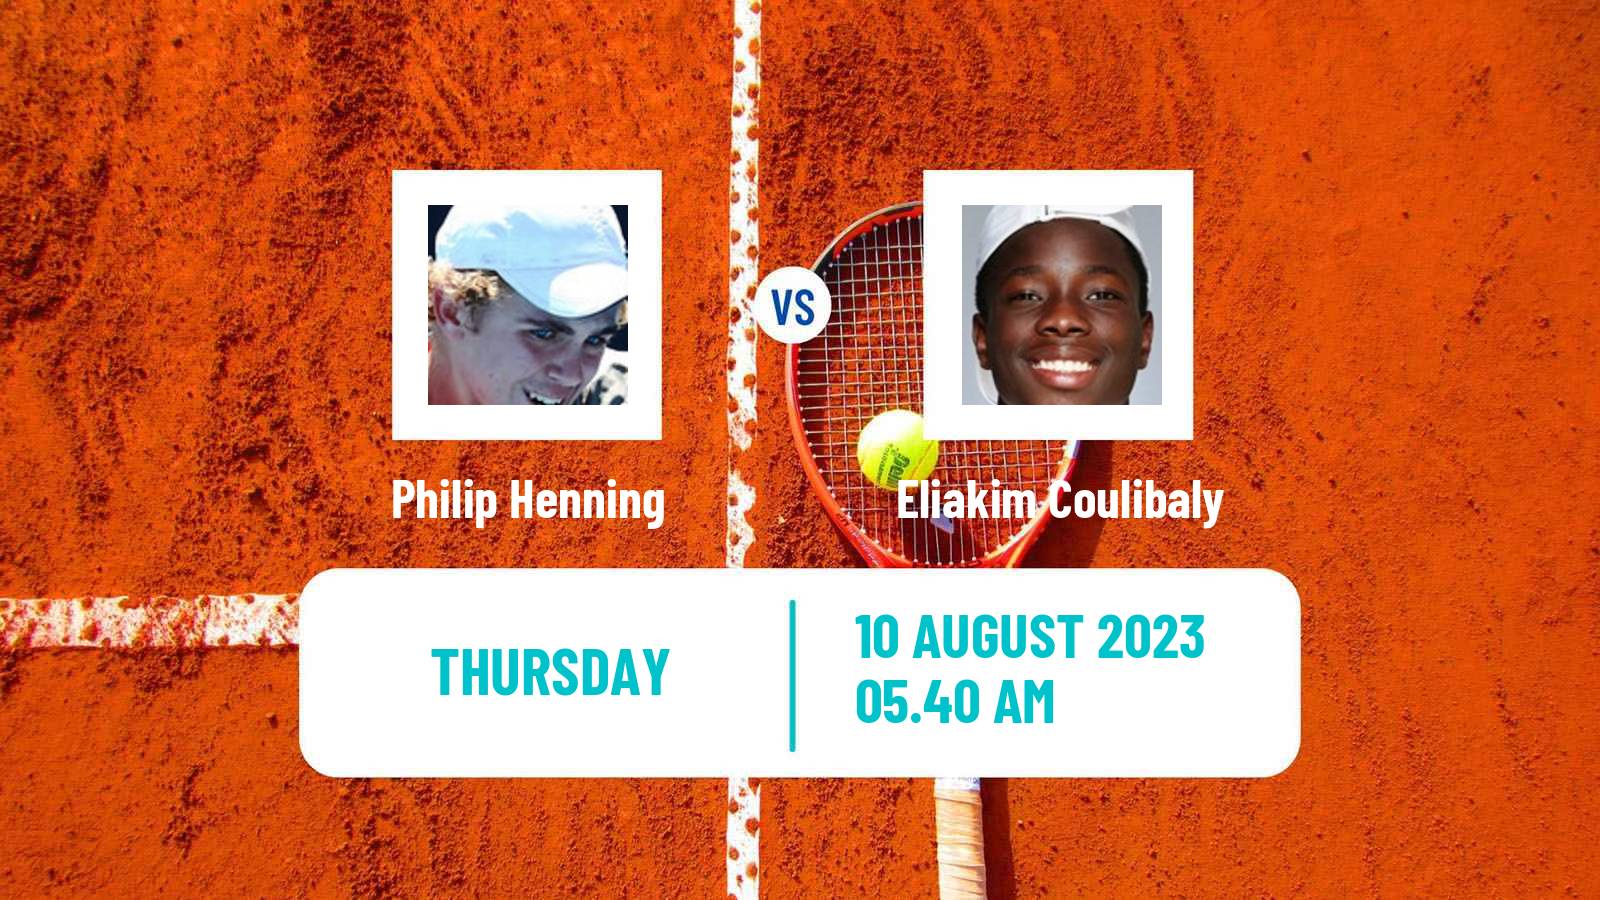 Tennis Davis Cup Group III Philip Henning - Eliakim Coulibaly